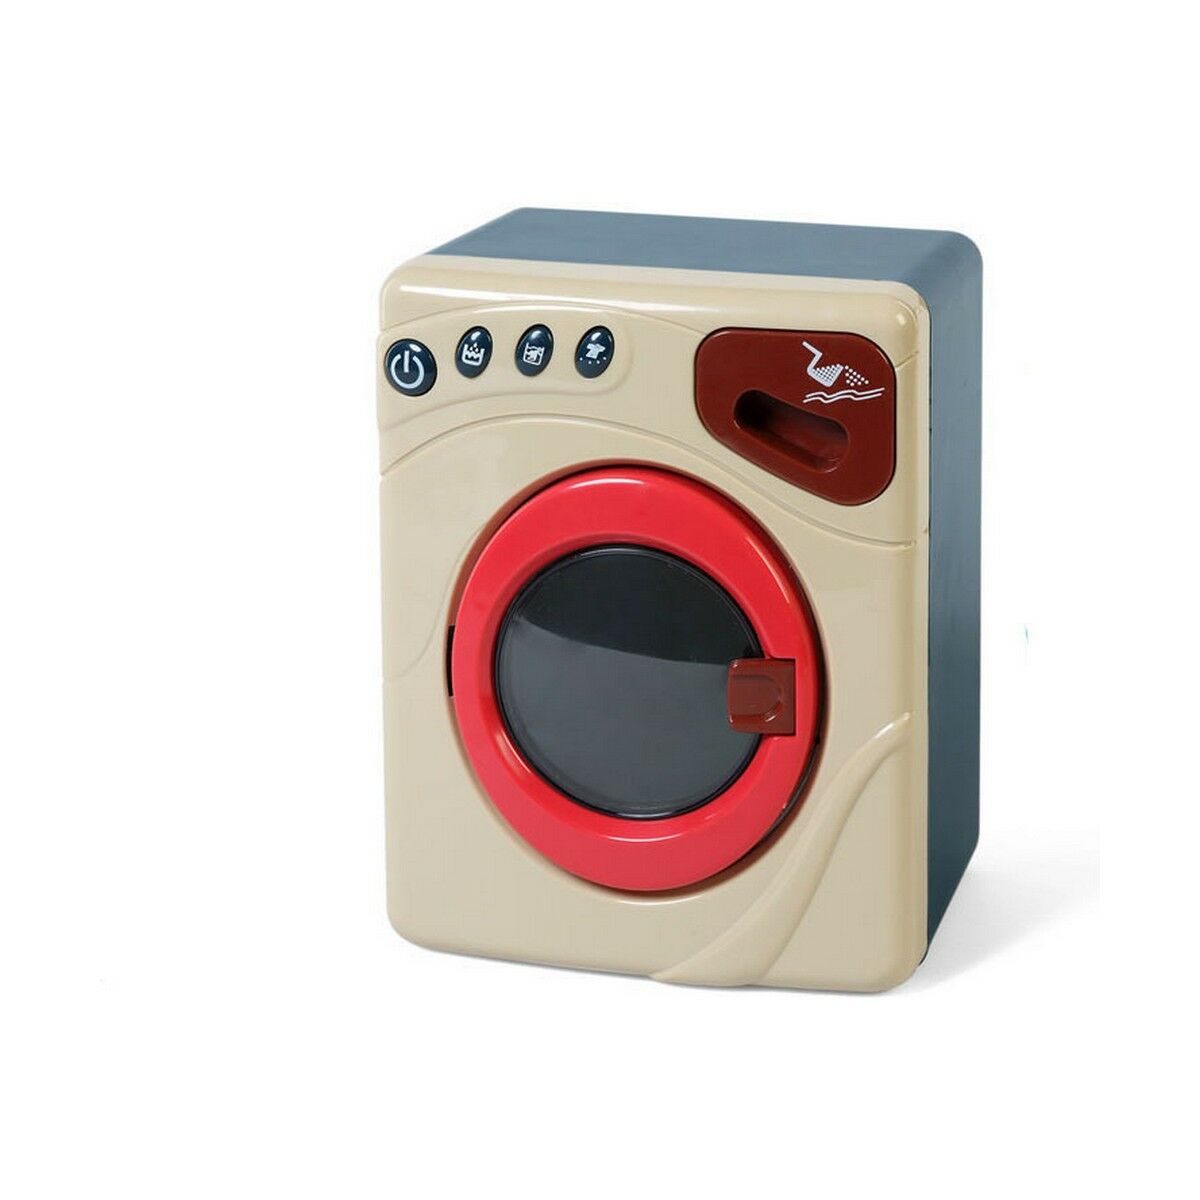 Toy washing machine with sound Toy 23 x 20 cm - Little Baby Shop